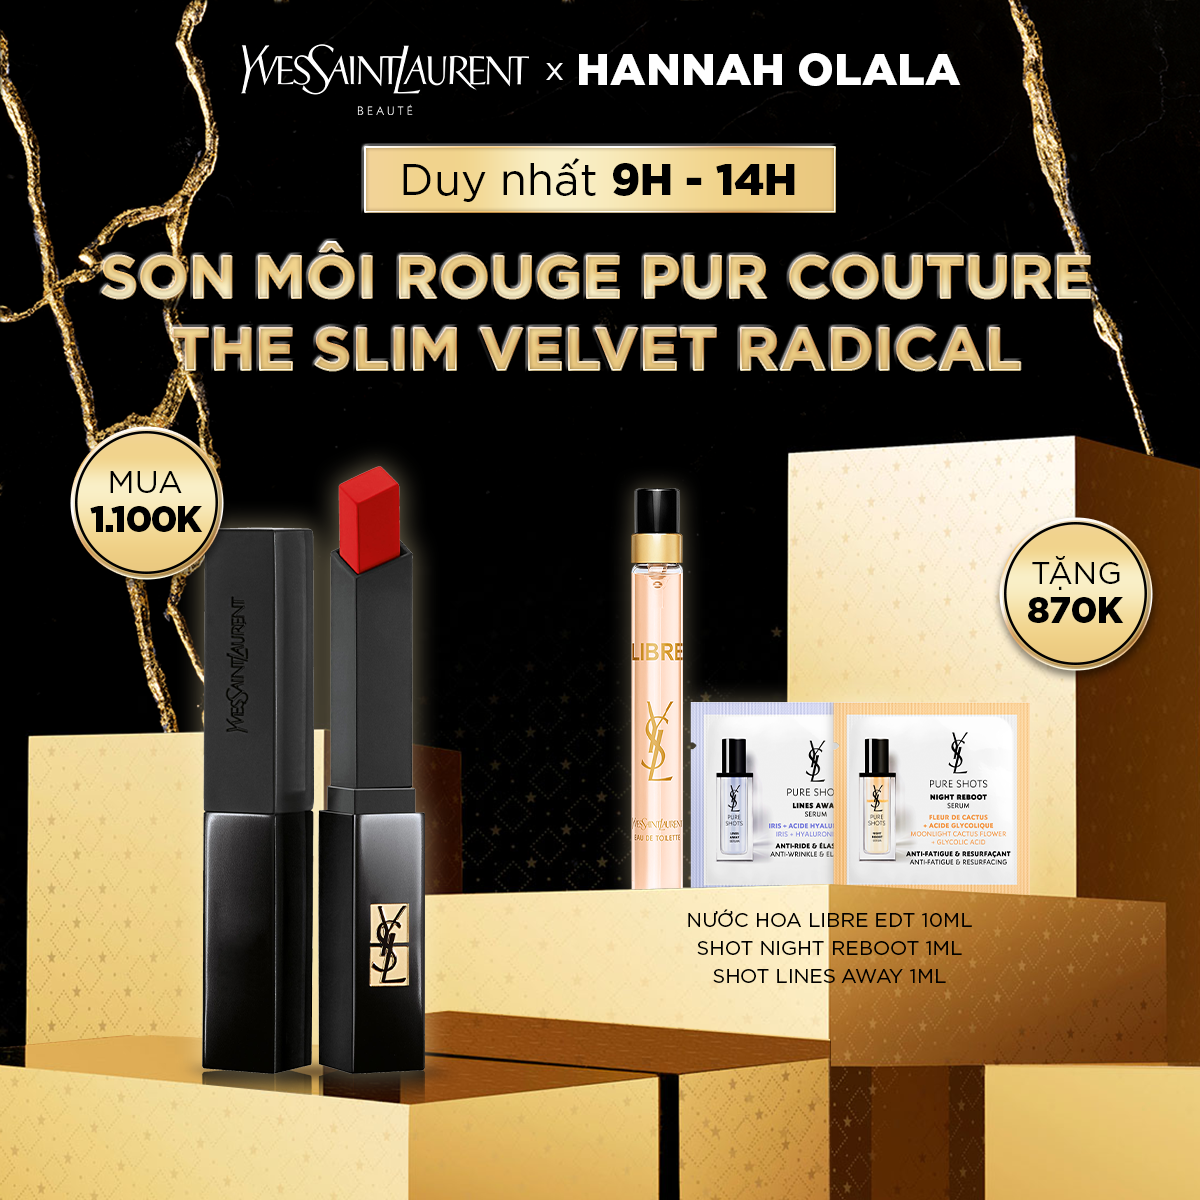 [FLS] Son môi Rouge Pur Couture The Slim Velvet Radical